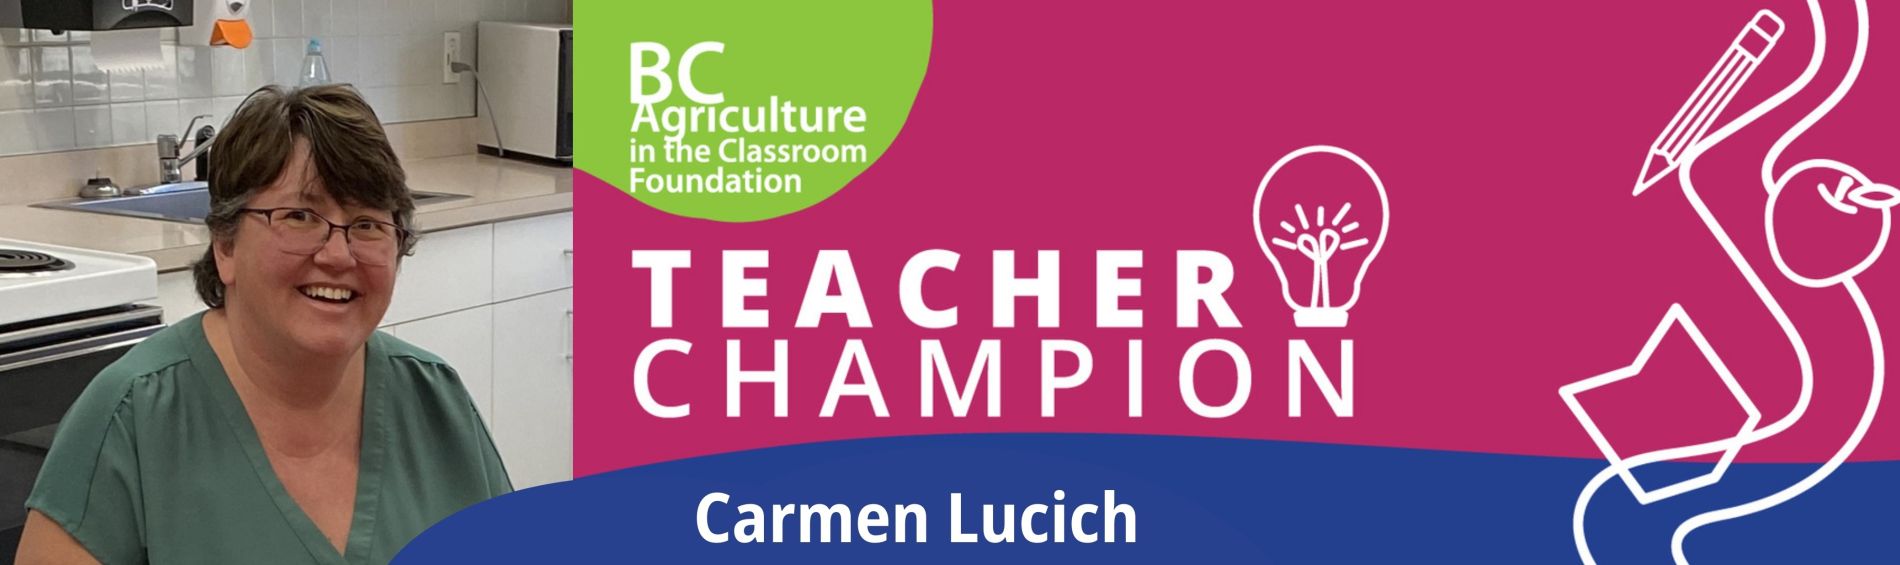 Teacher Champion - Carmen